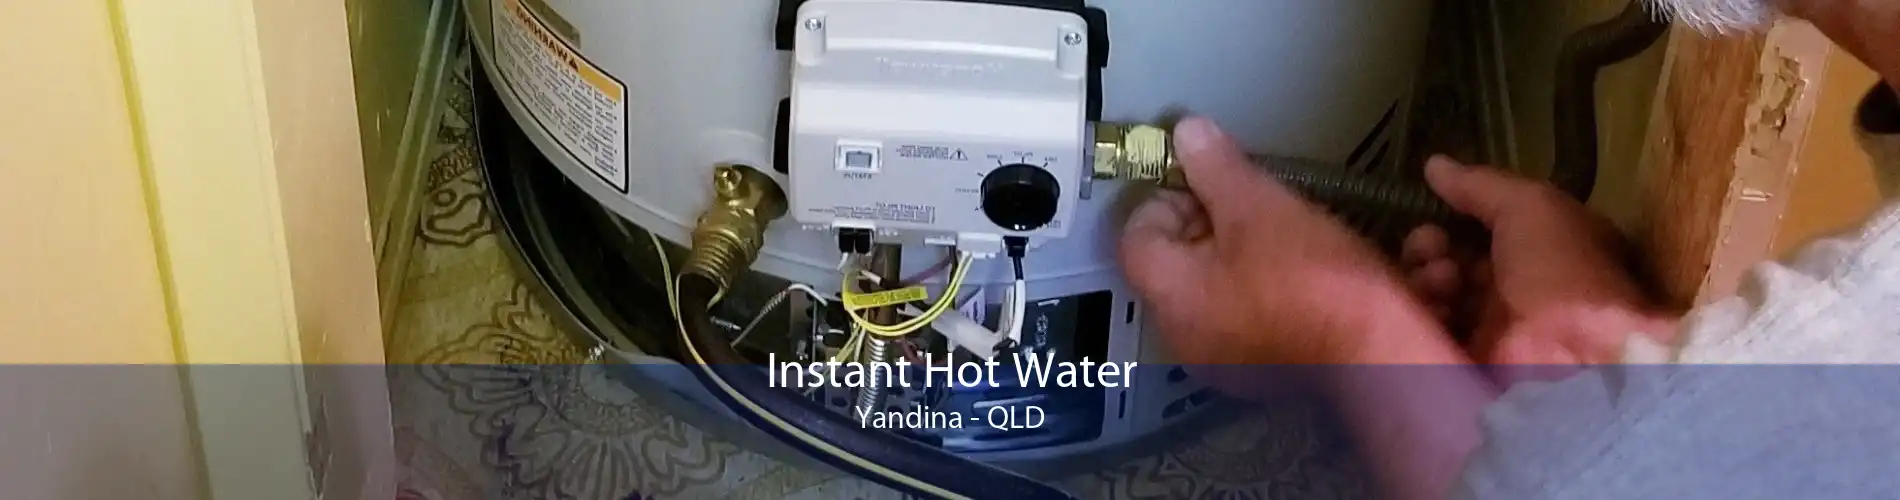 Instant Hot Water Yandina - QLD